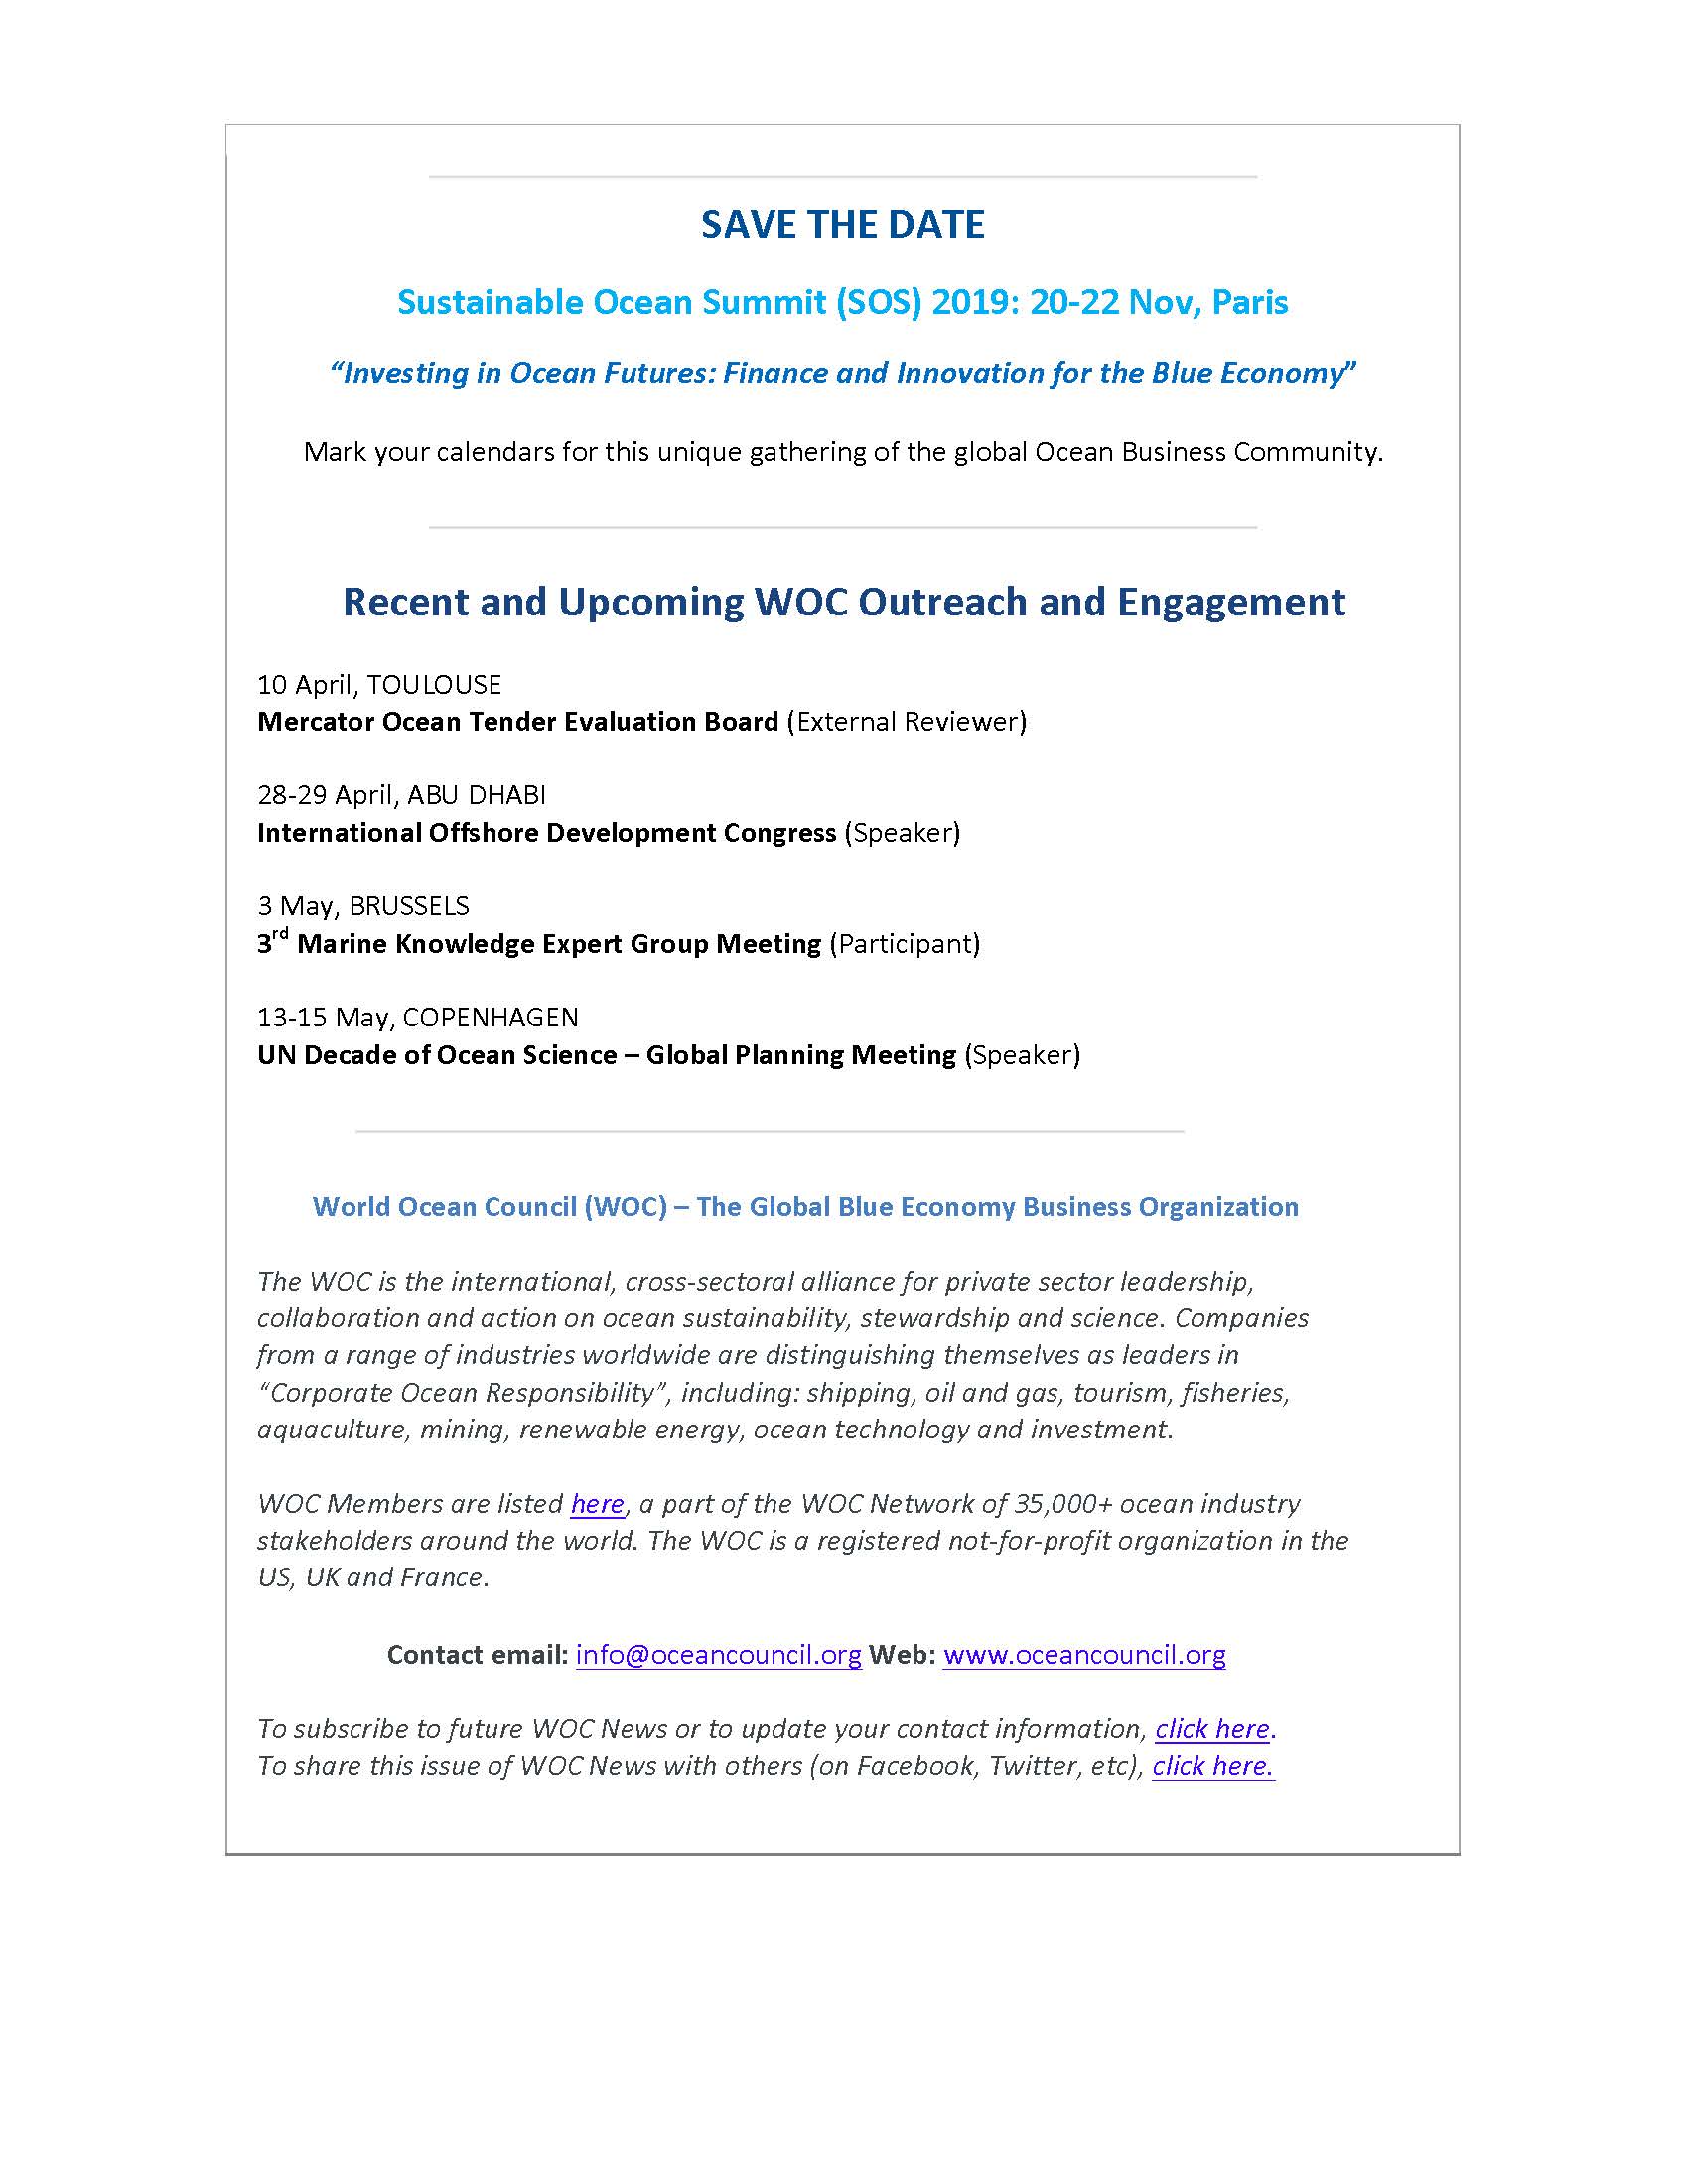 International Offshore Development Congress (28-29 Apr, Abu Dhabi) Invites WOC as Strategic Partner - 10 April 2019